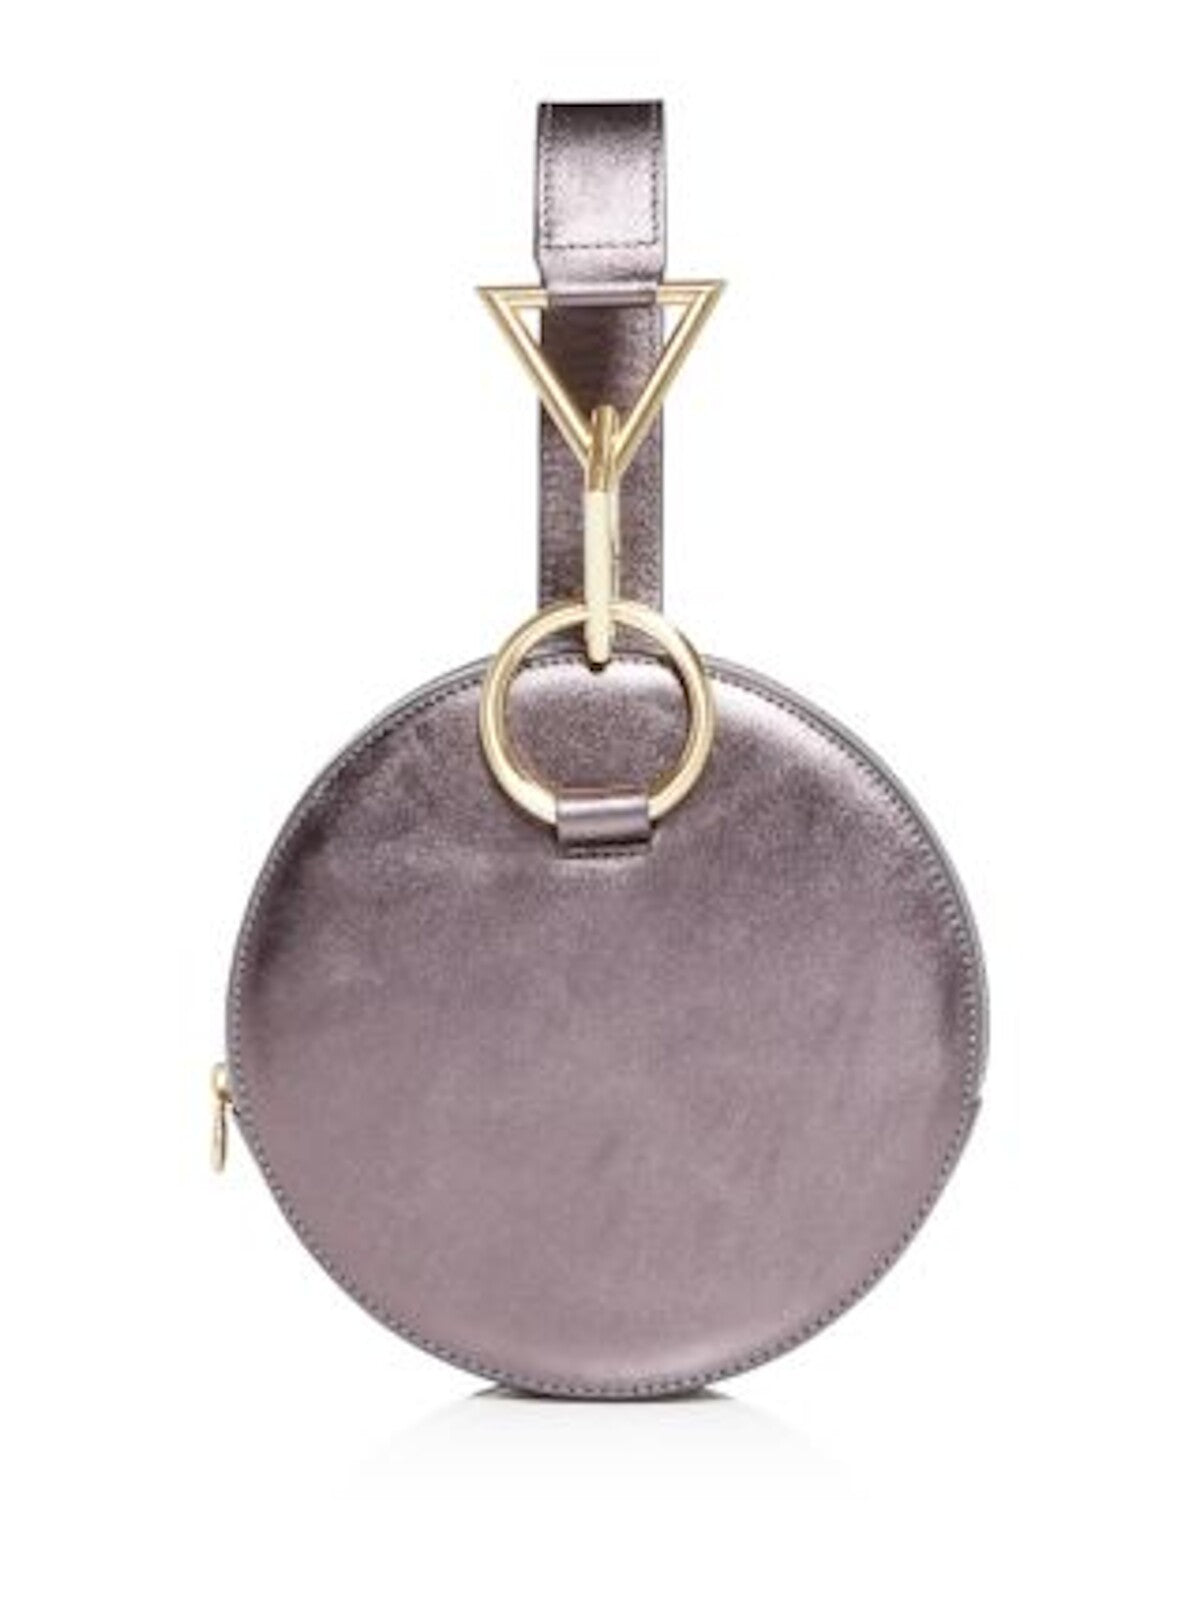 TARA ZADEH Women's Silver Leather Single Strap Handbag Purse